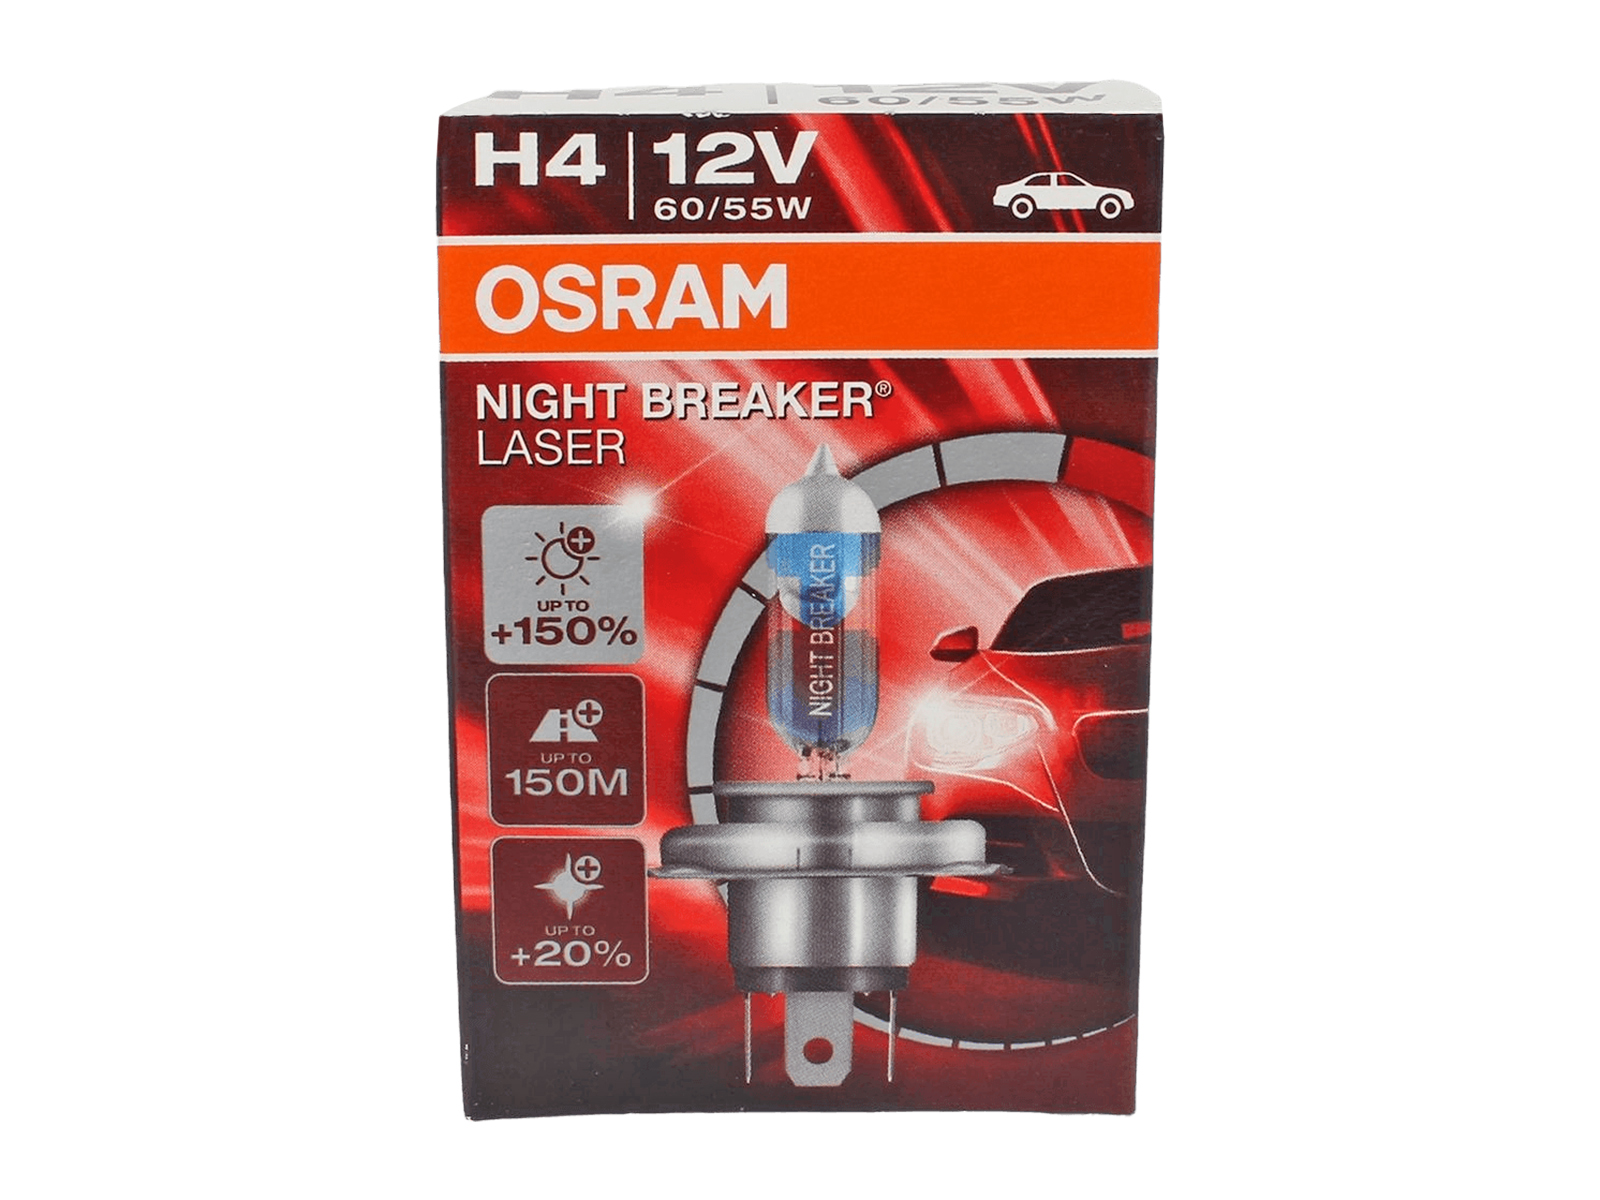 Лампа OSRAM Night Breaker Laser H4 12V 60/55W 1 штука фотография №4